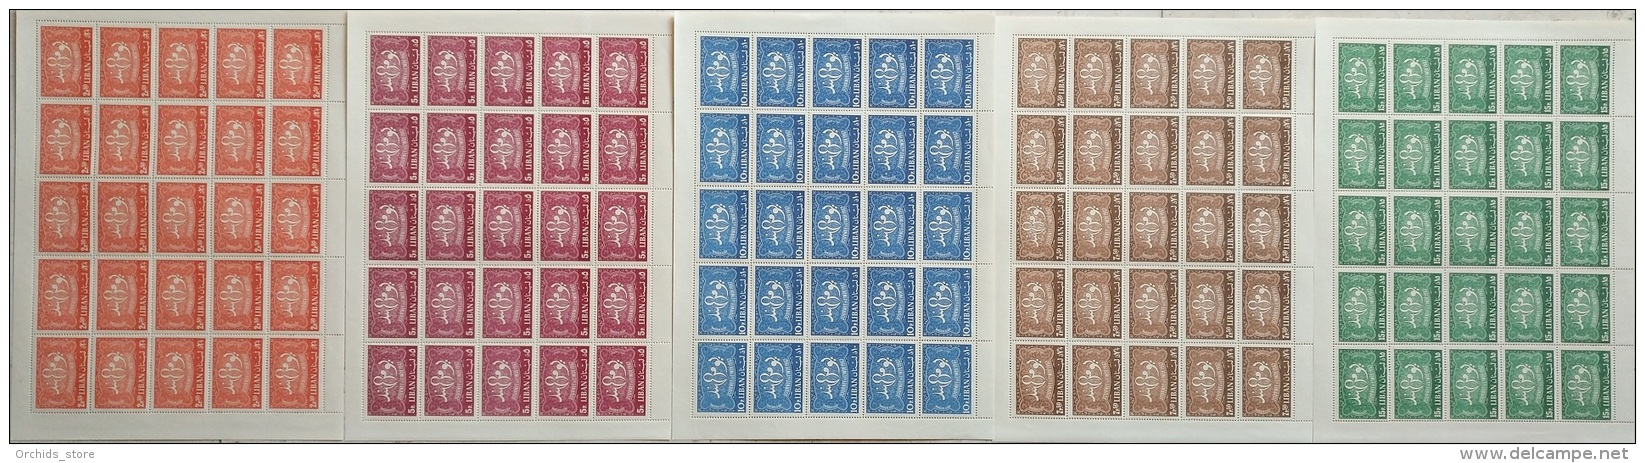 Lebanon 1967 Mi. 1010-1014 Complete Set 5v. All MNH FULL Sheets 20 Stamps, India Issue - Lebanon